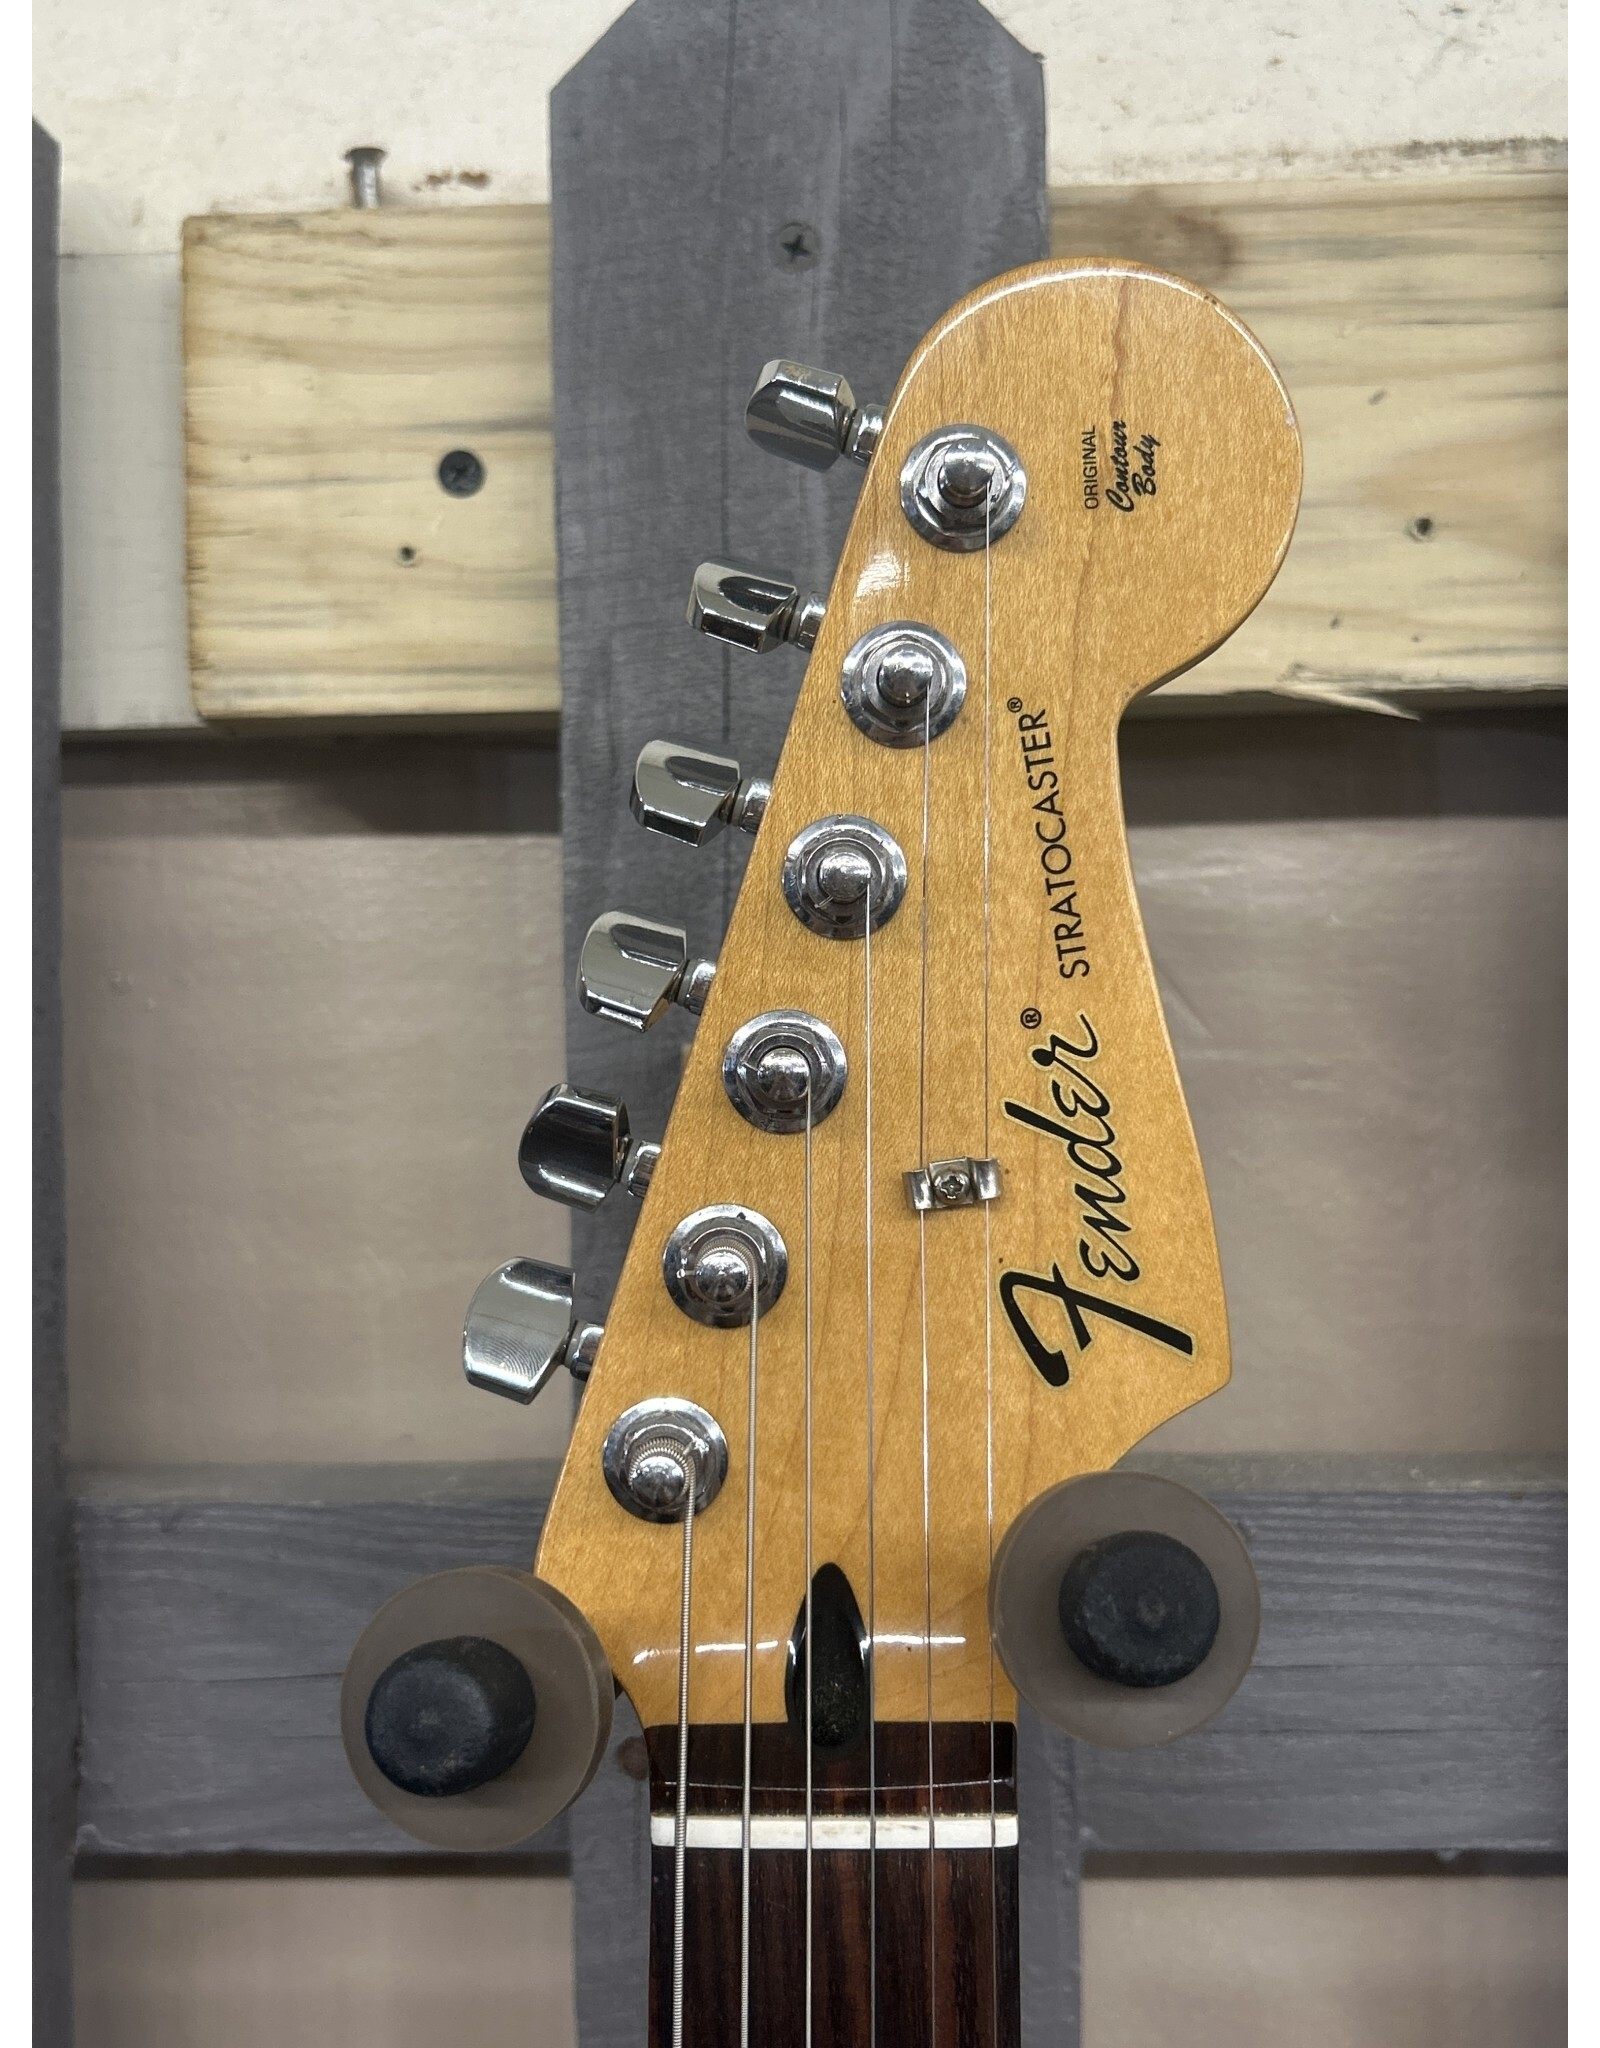 Fender Fender Stratocaster MIM 2013 Sienna Burst W/HSC (Used)